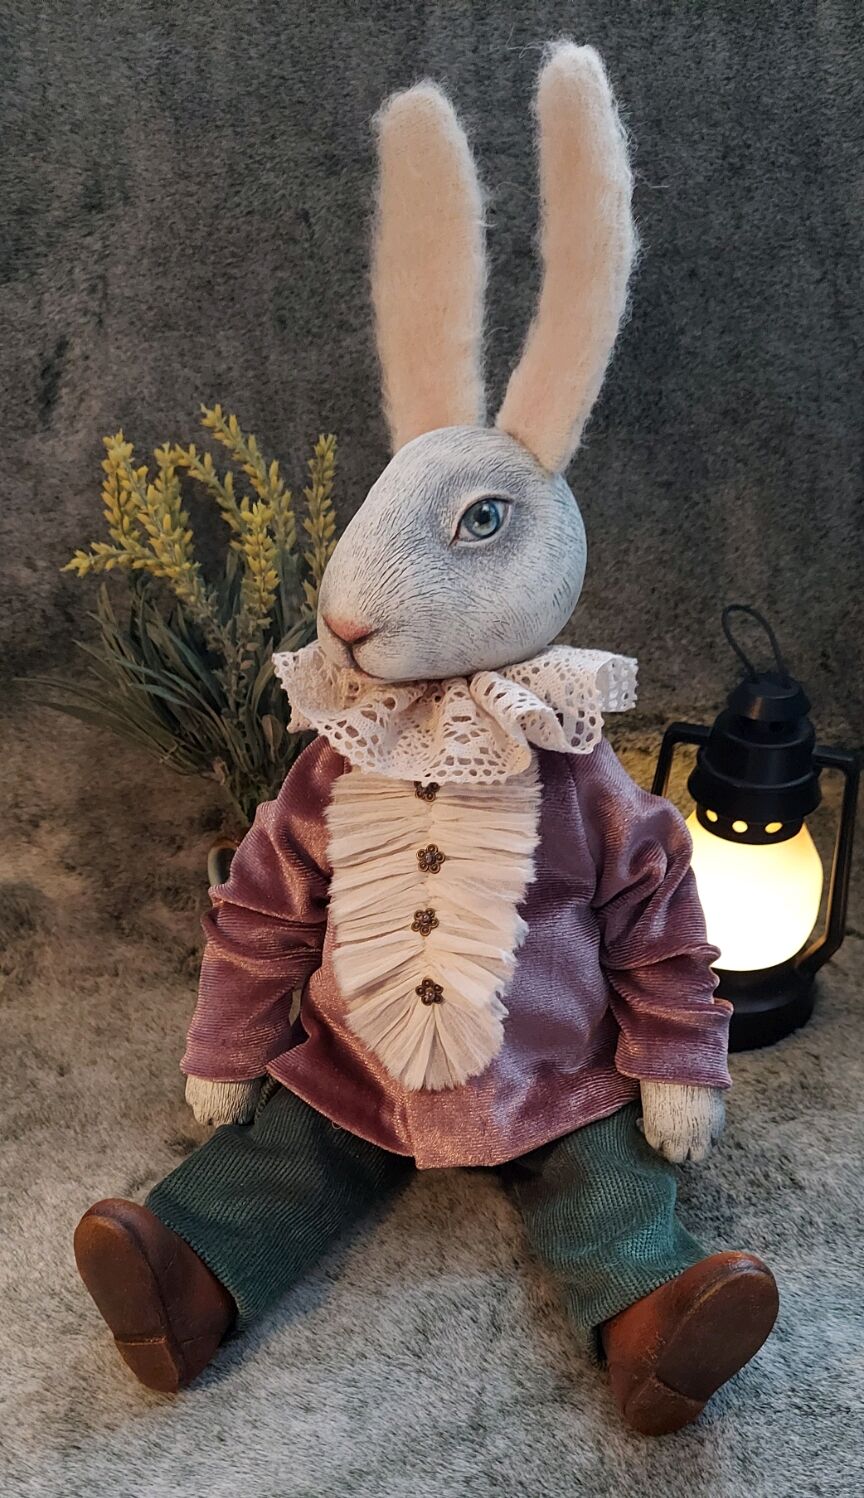 Кролик Эдвард